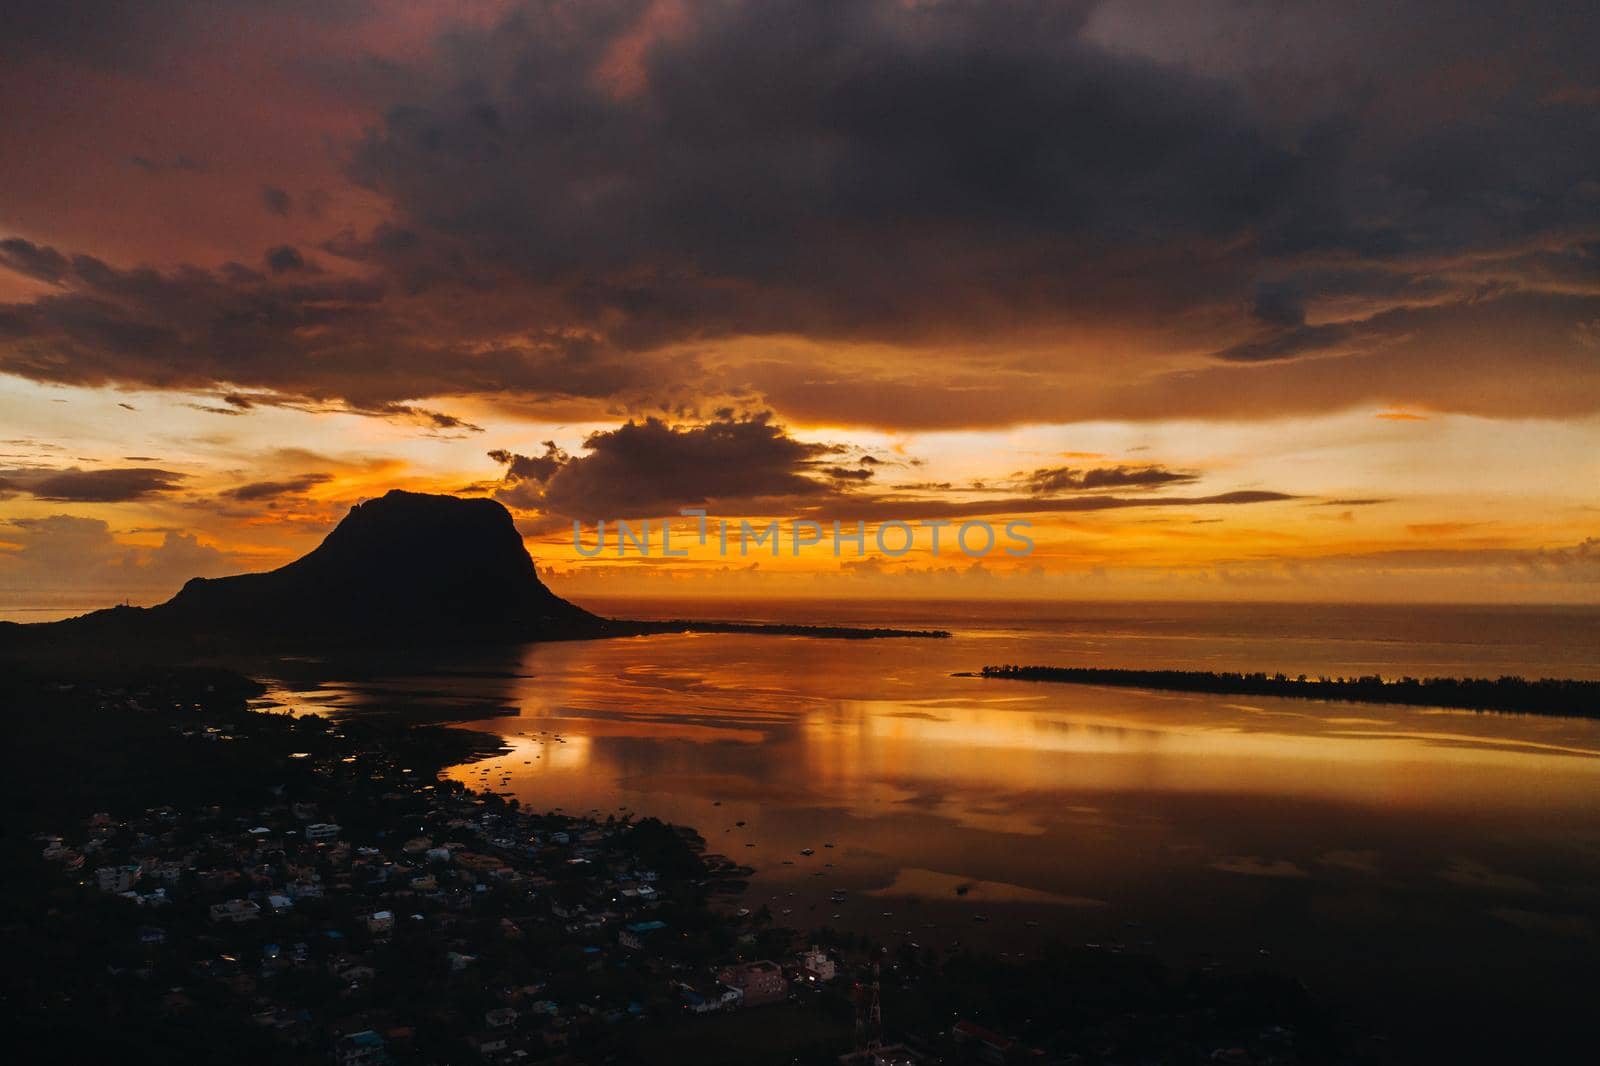 Amazing view of Le Morne Brabant at sunset. Mauritius island